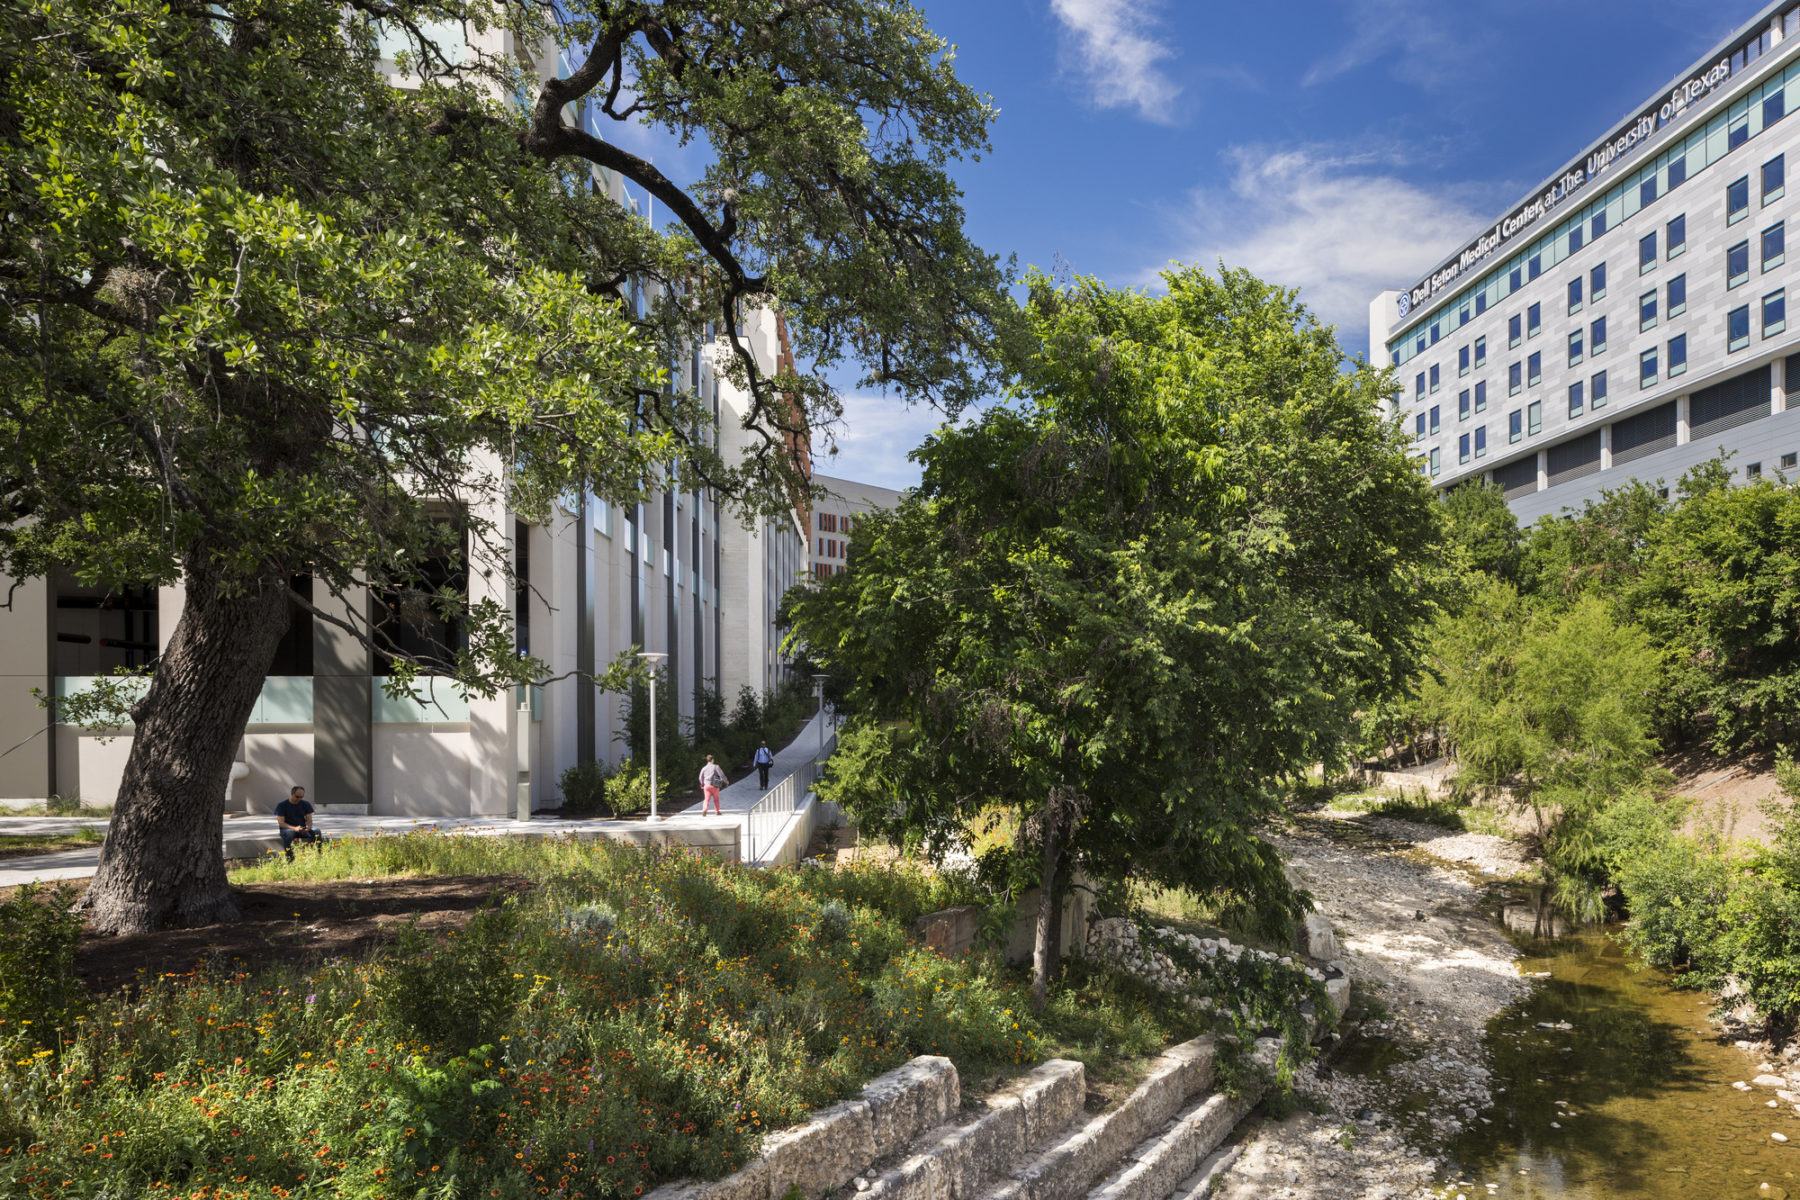 Green, leafy landscape encapsulates new medical district